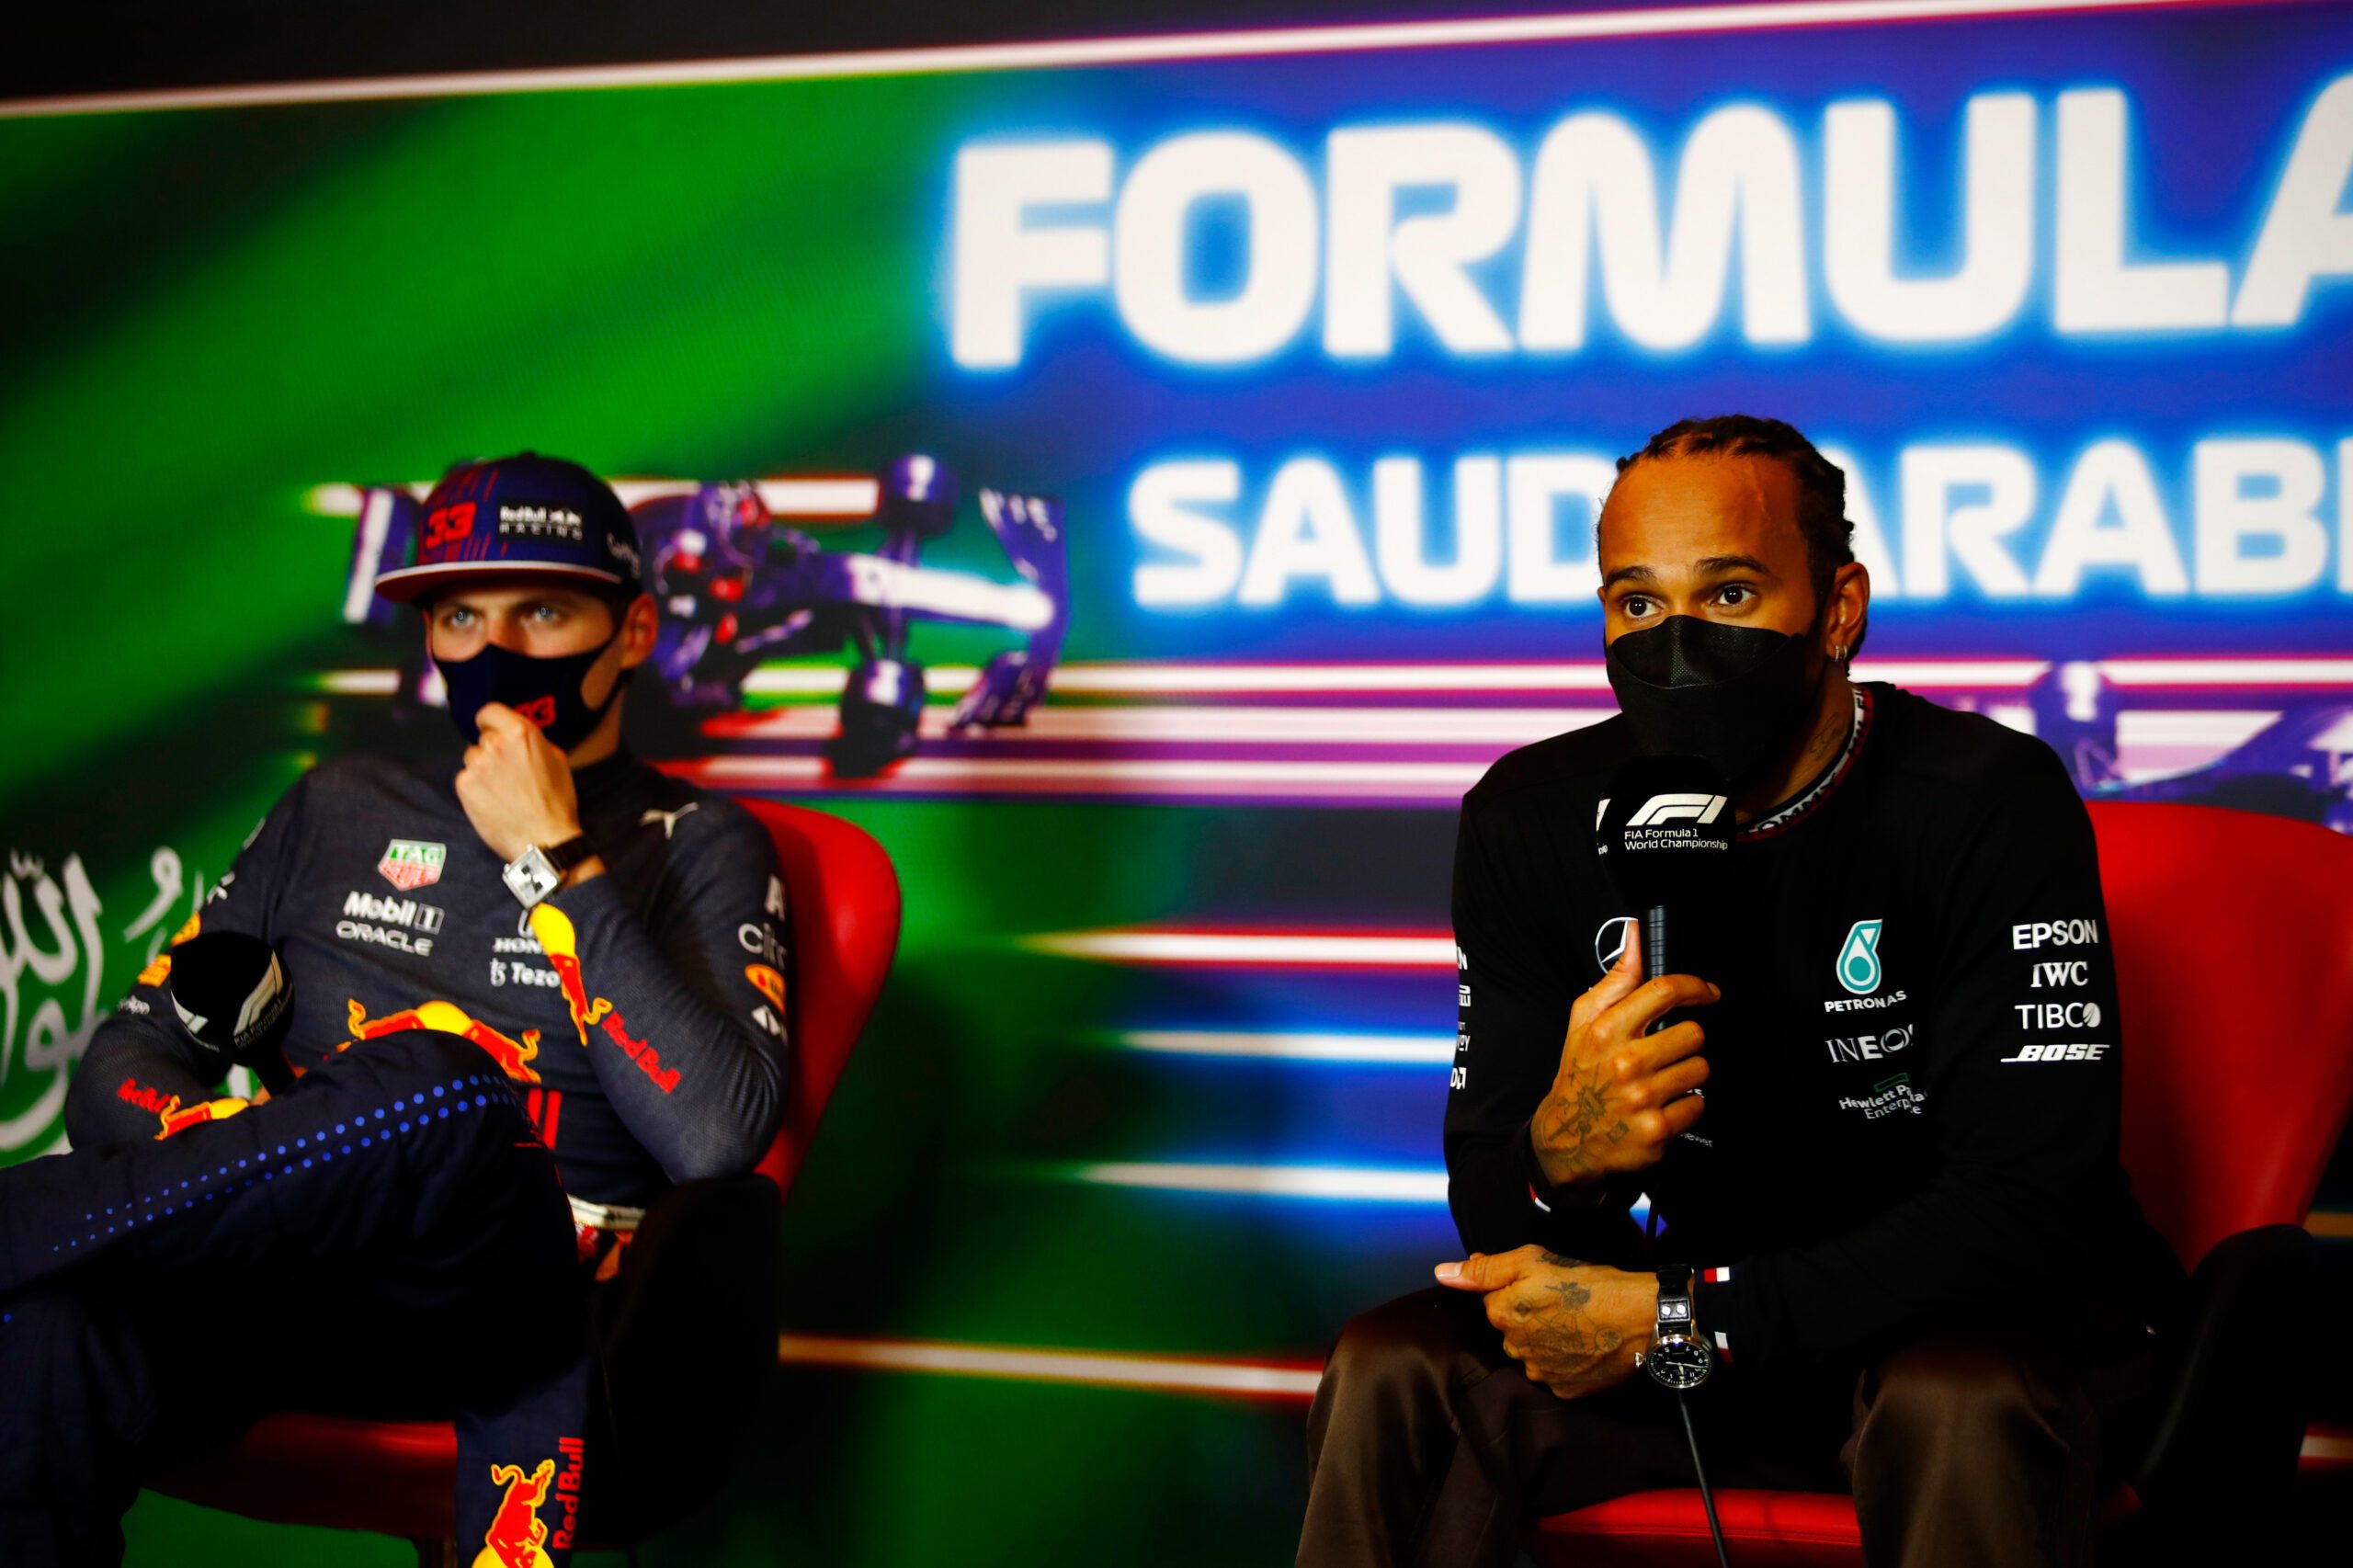 JEDDAH,SAUDI ARABIA,05.DEC.21 - MOTORSPORTS, FORMULA 1 - Grand Prix of Saudi Arabia, Jeddah Corniche Circuit, FIA press conference. Image shows Max Verstappen (NED/ Red Bull Racing) and Lewis Hamilton (GBR/ Mercedes).